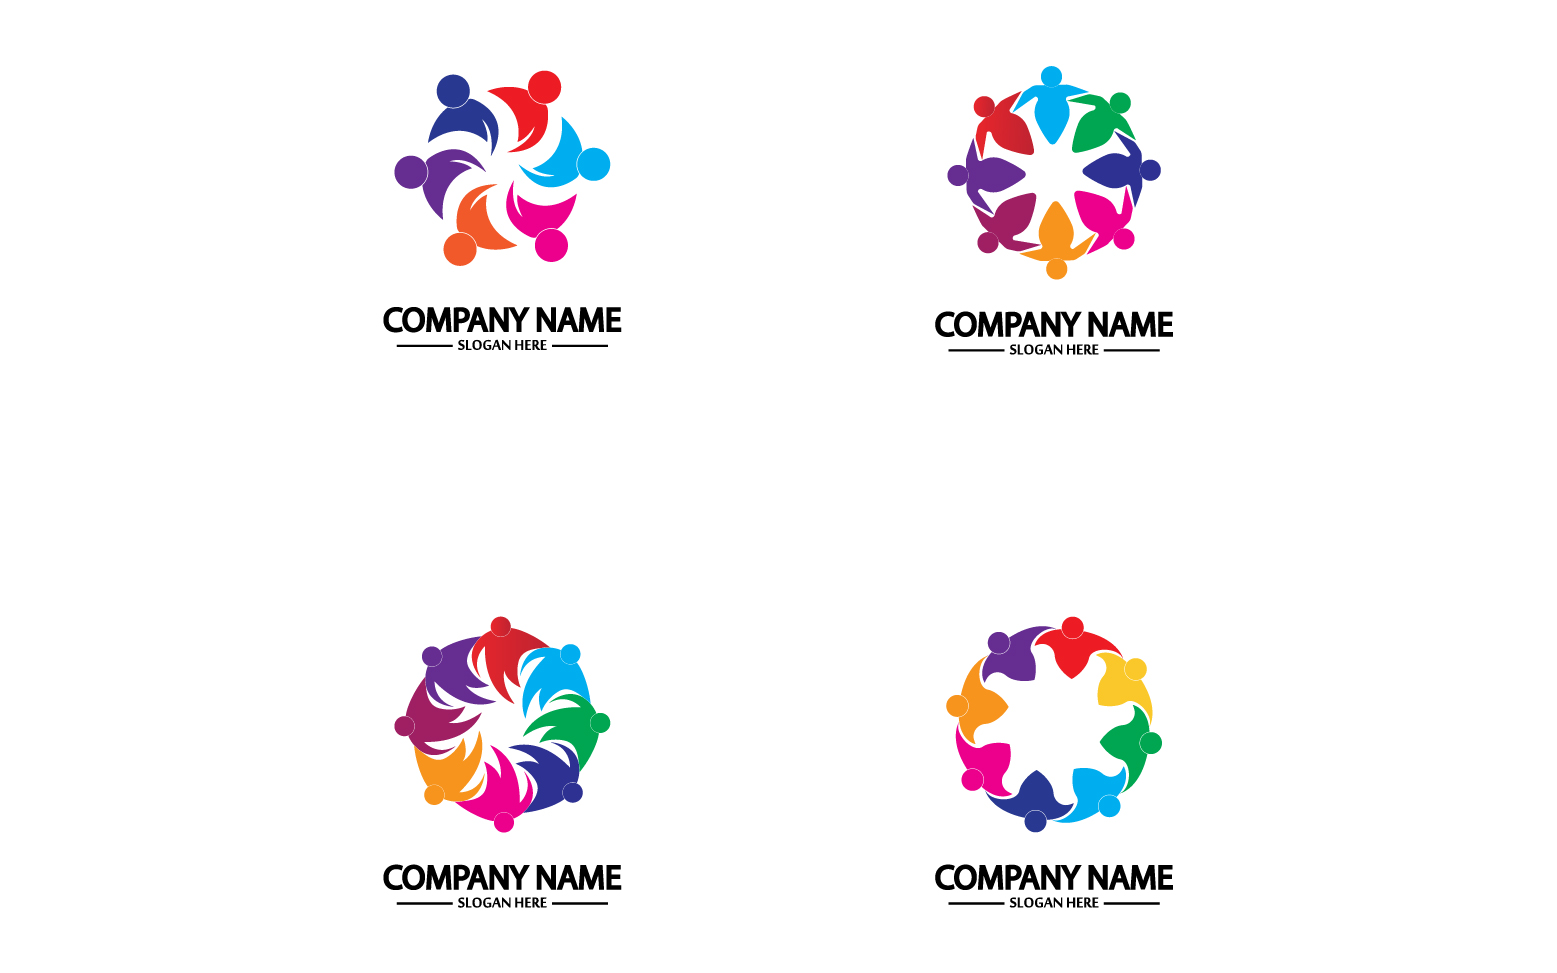 Team group frient community logo v37